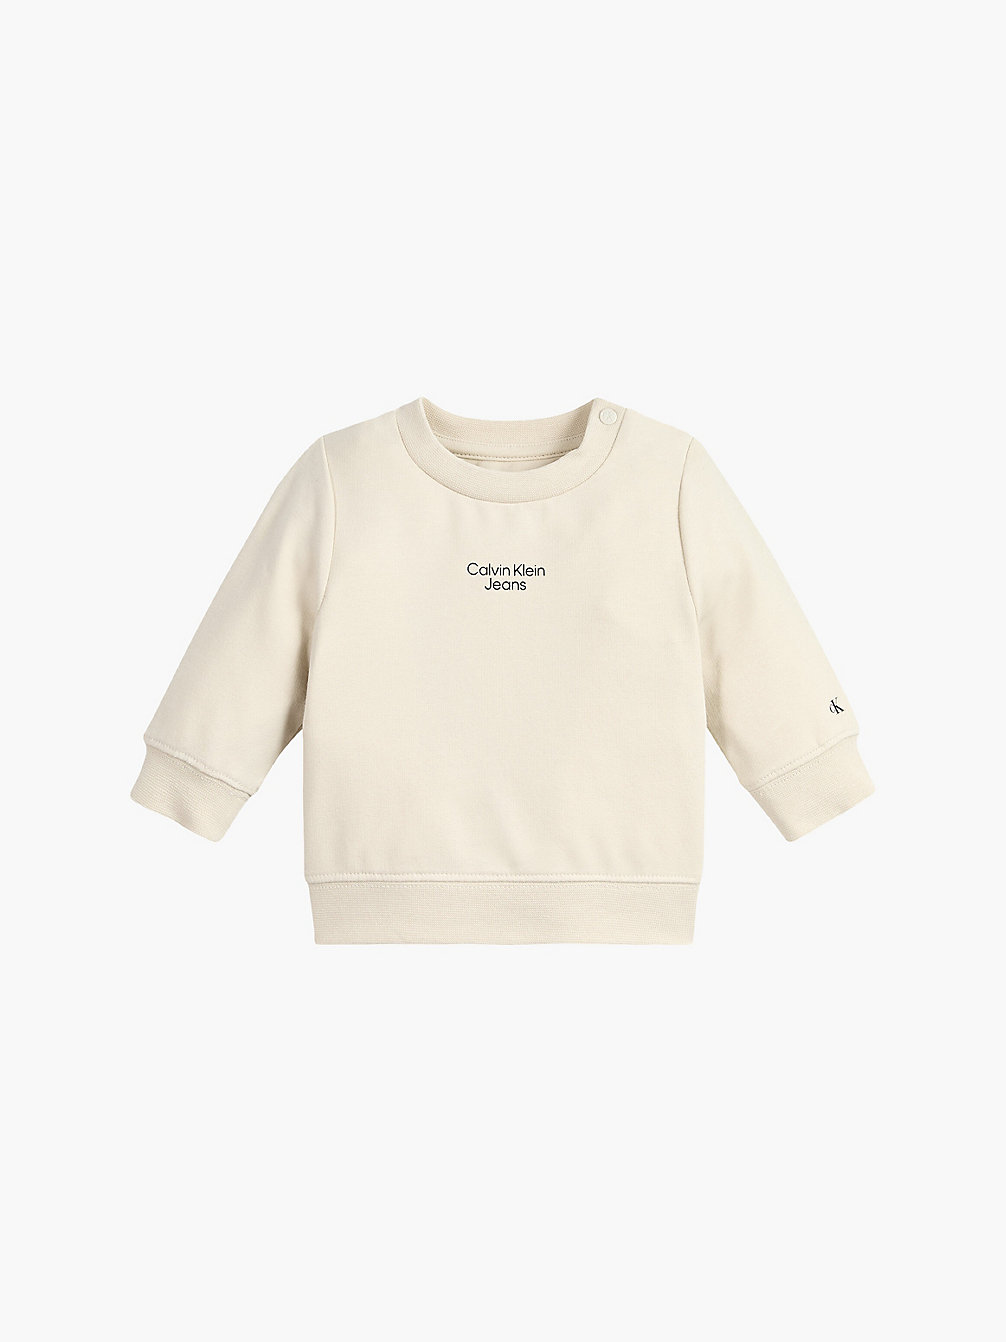 MUSLIN Newborn-Sweatshirt Van Biologisch Katoen undefined newborn Calvin Klein